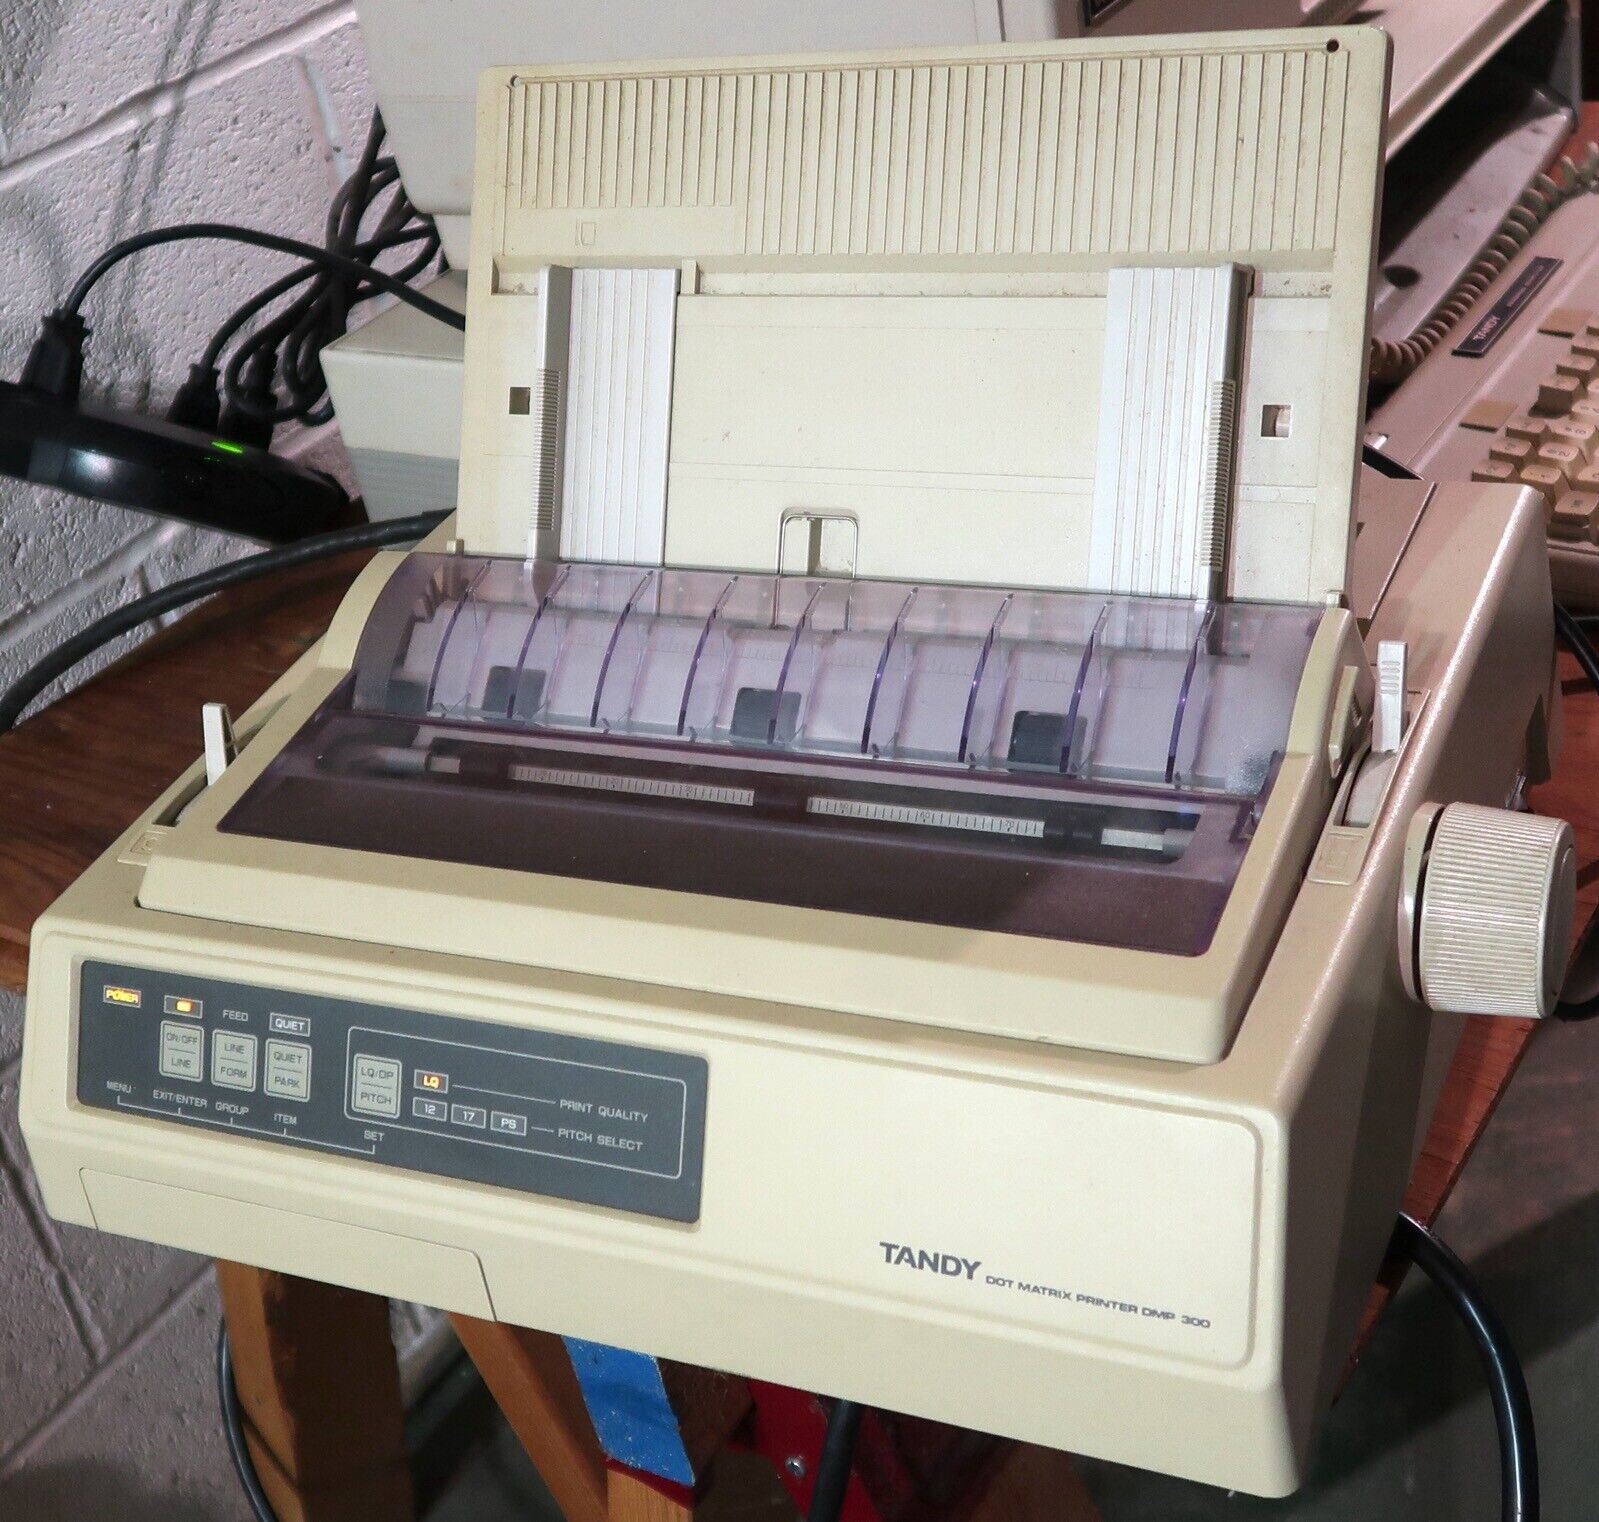 Tandy DMP 300 Dot Matrix Printer with Original Cover, Cable, Manual - VERY NICE